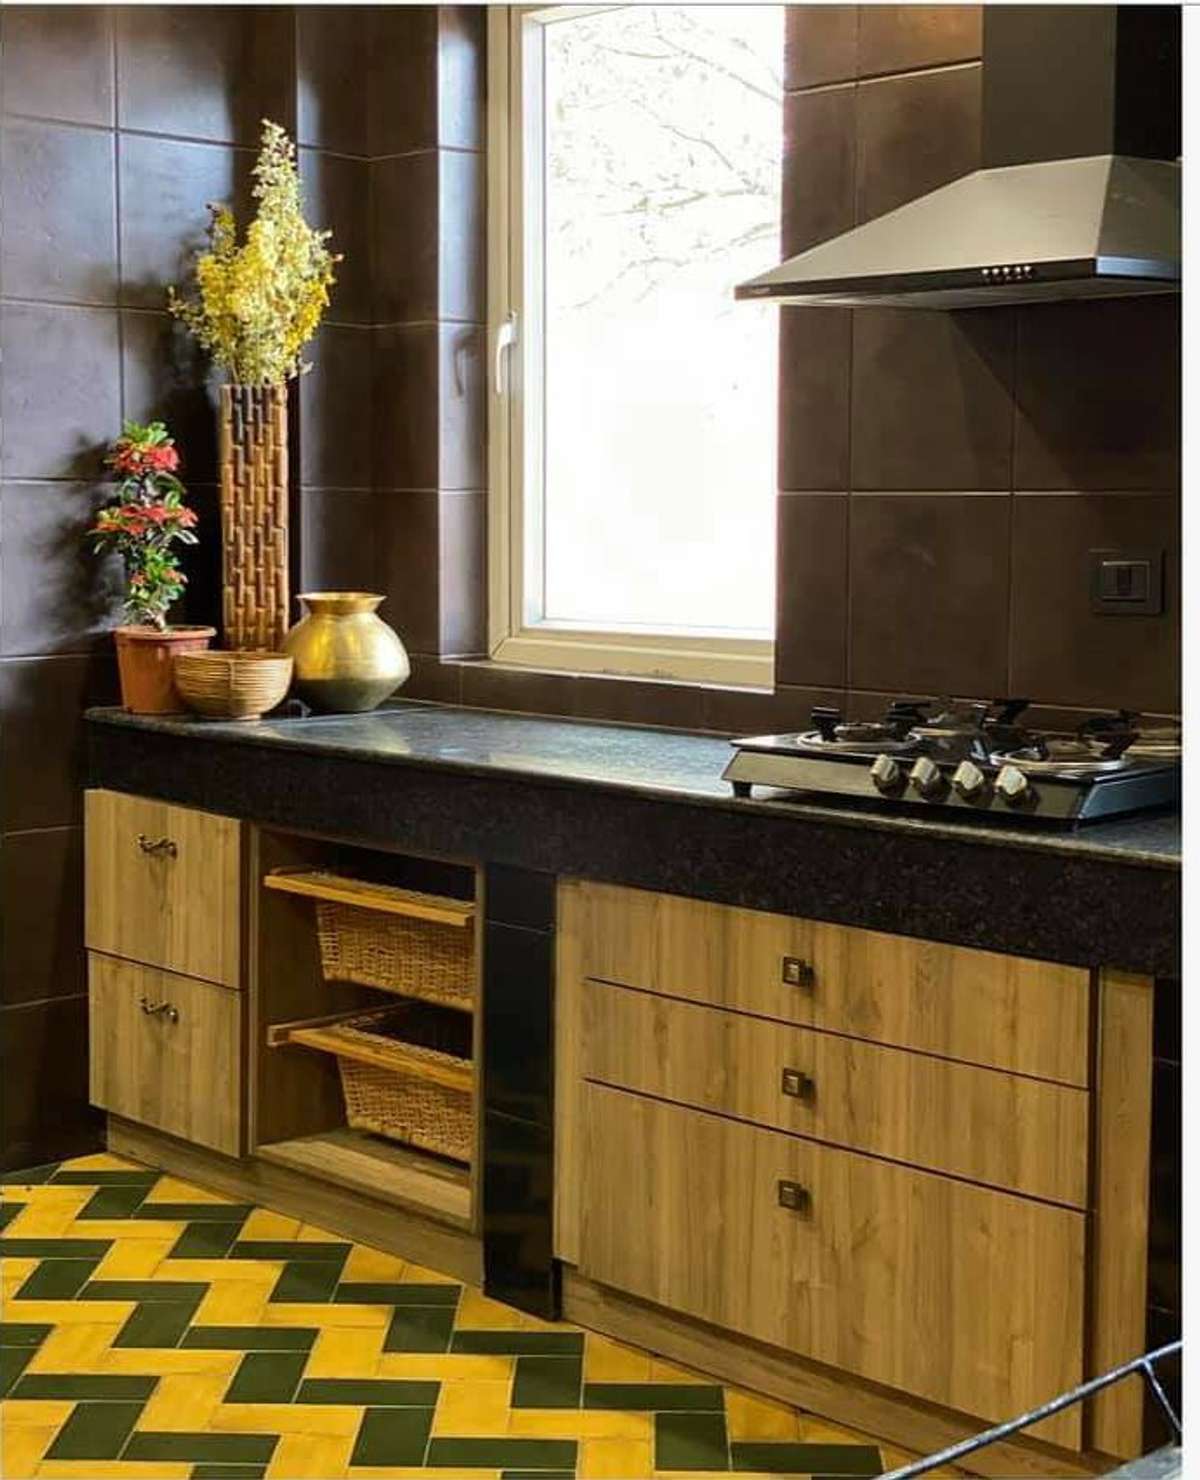 modular kitchen by SPADES INTERIO.

contact
9999502983/9999902983.

#InteriorDesigner #ModularKitchen #modularwardrobe #KitchenInterior #LUXURY_INTERIOR